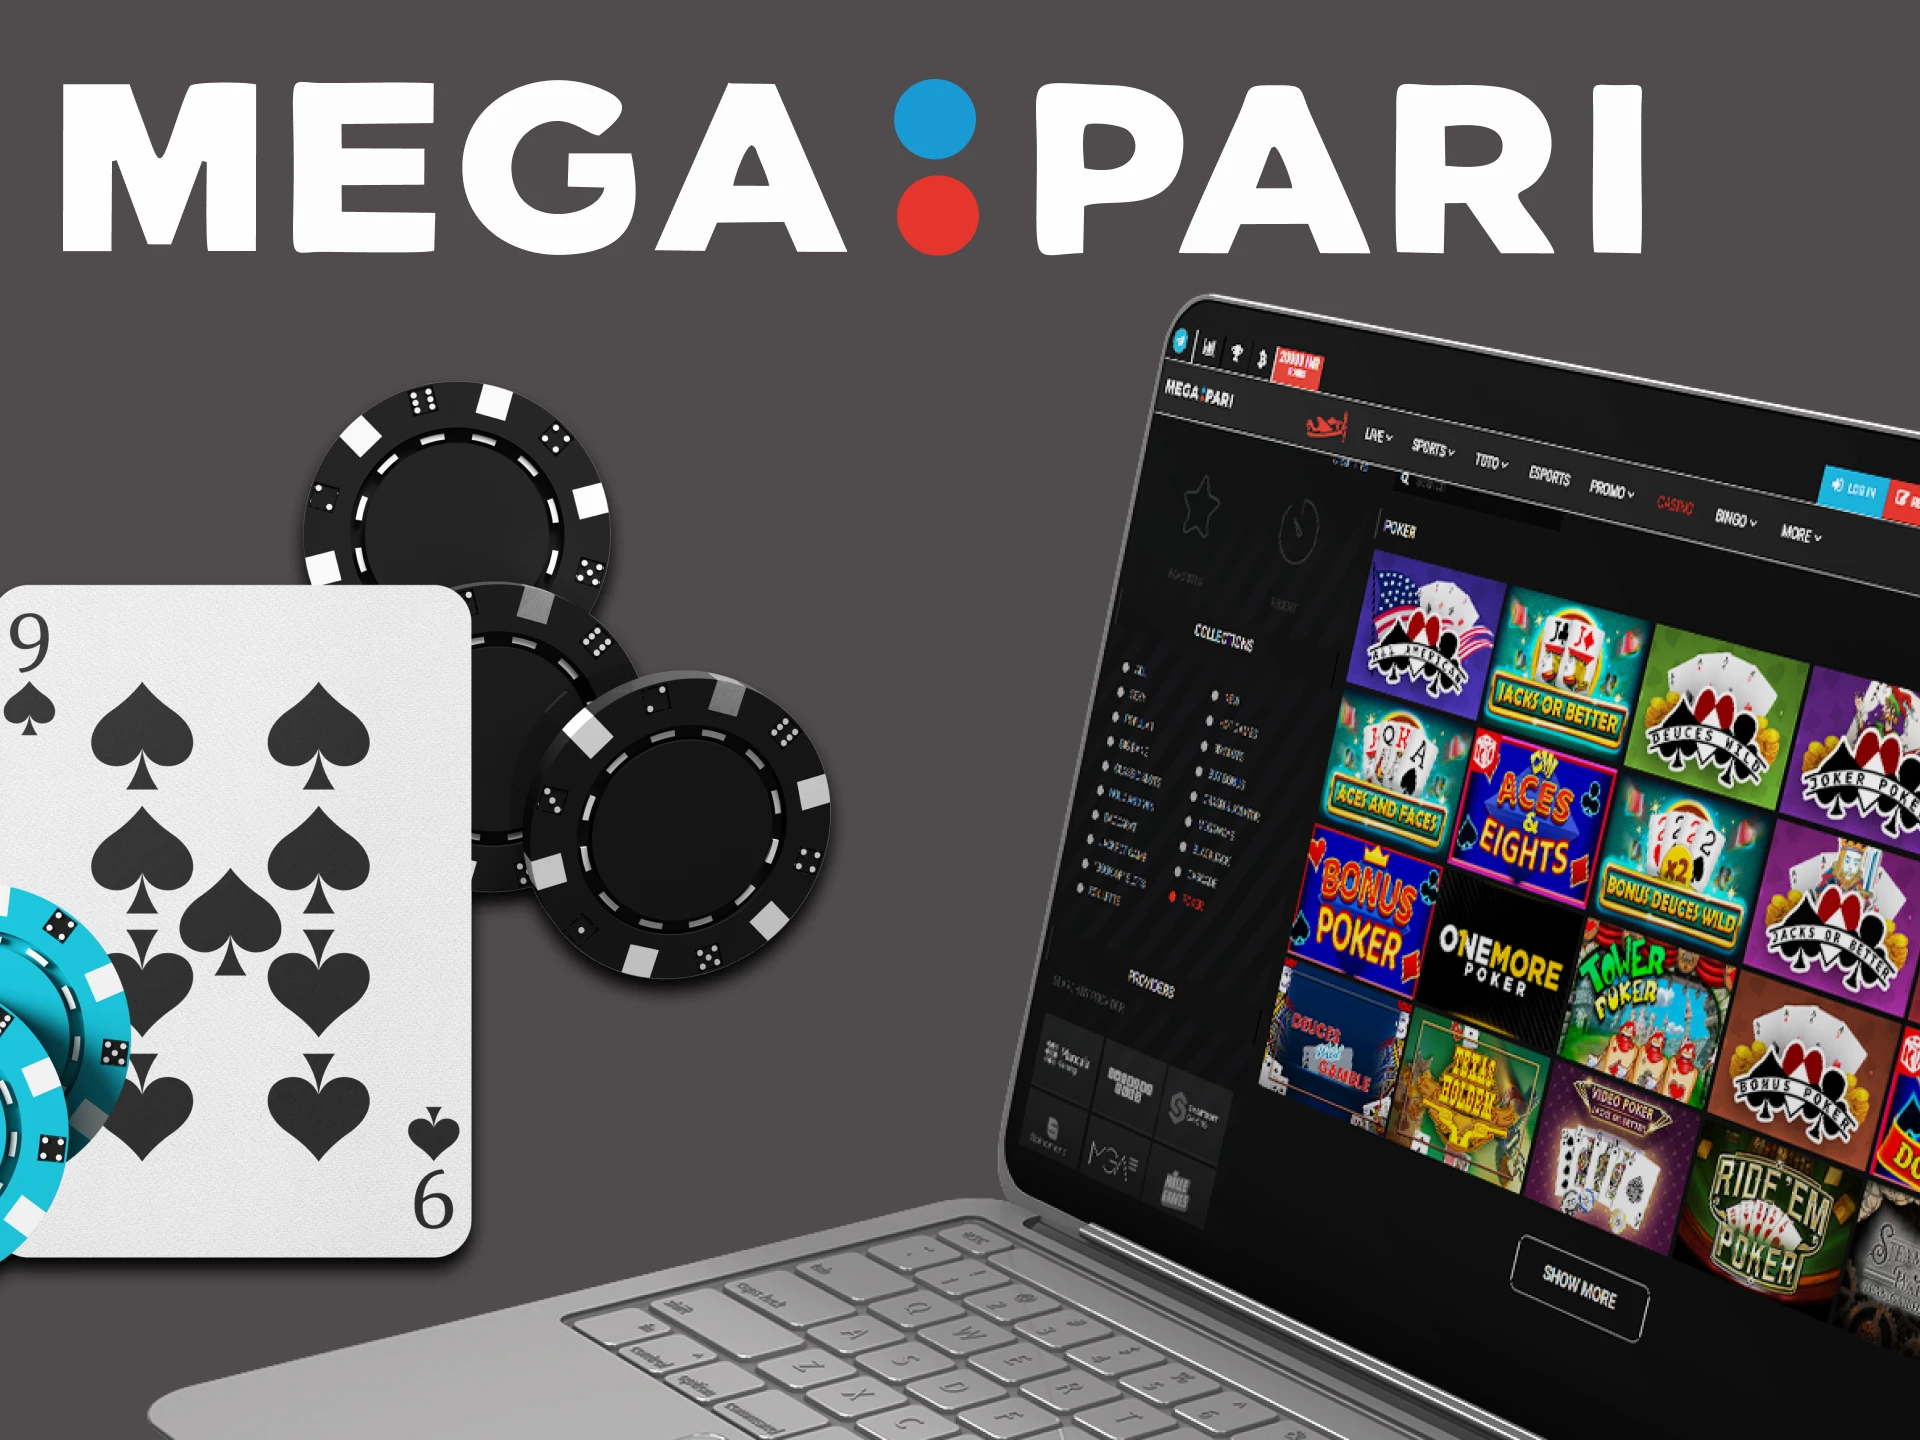 On Megapari you can play Poker.